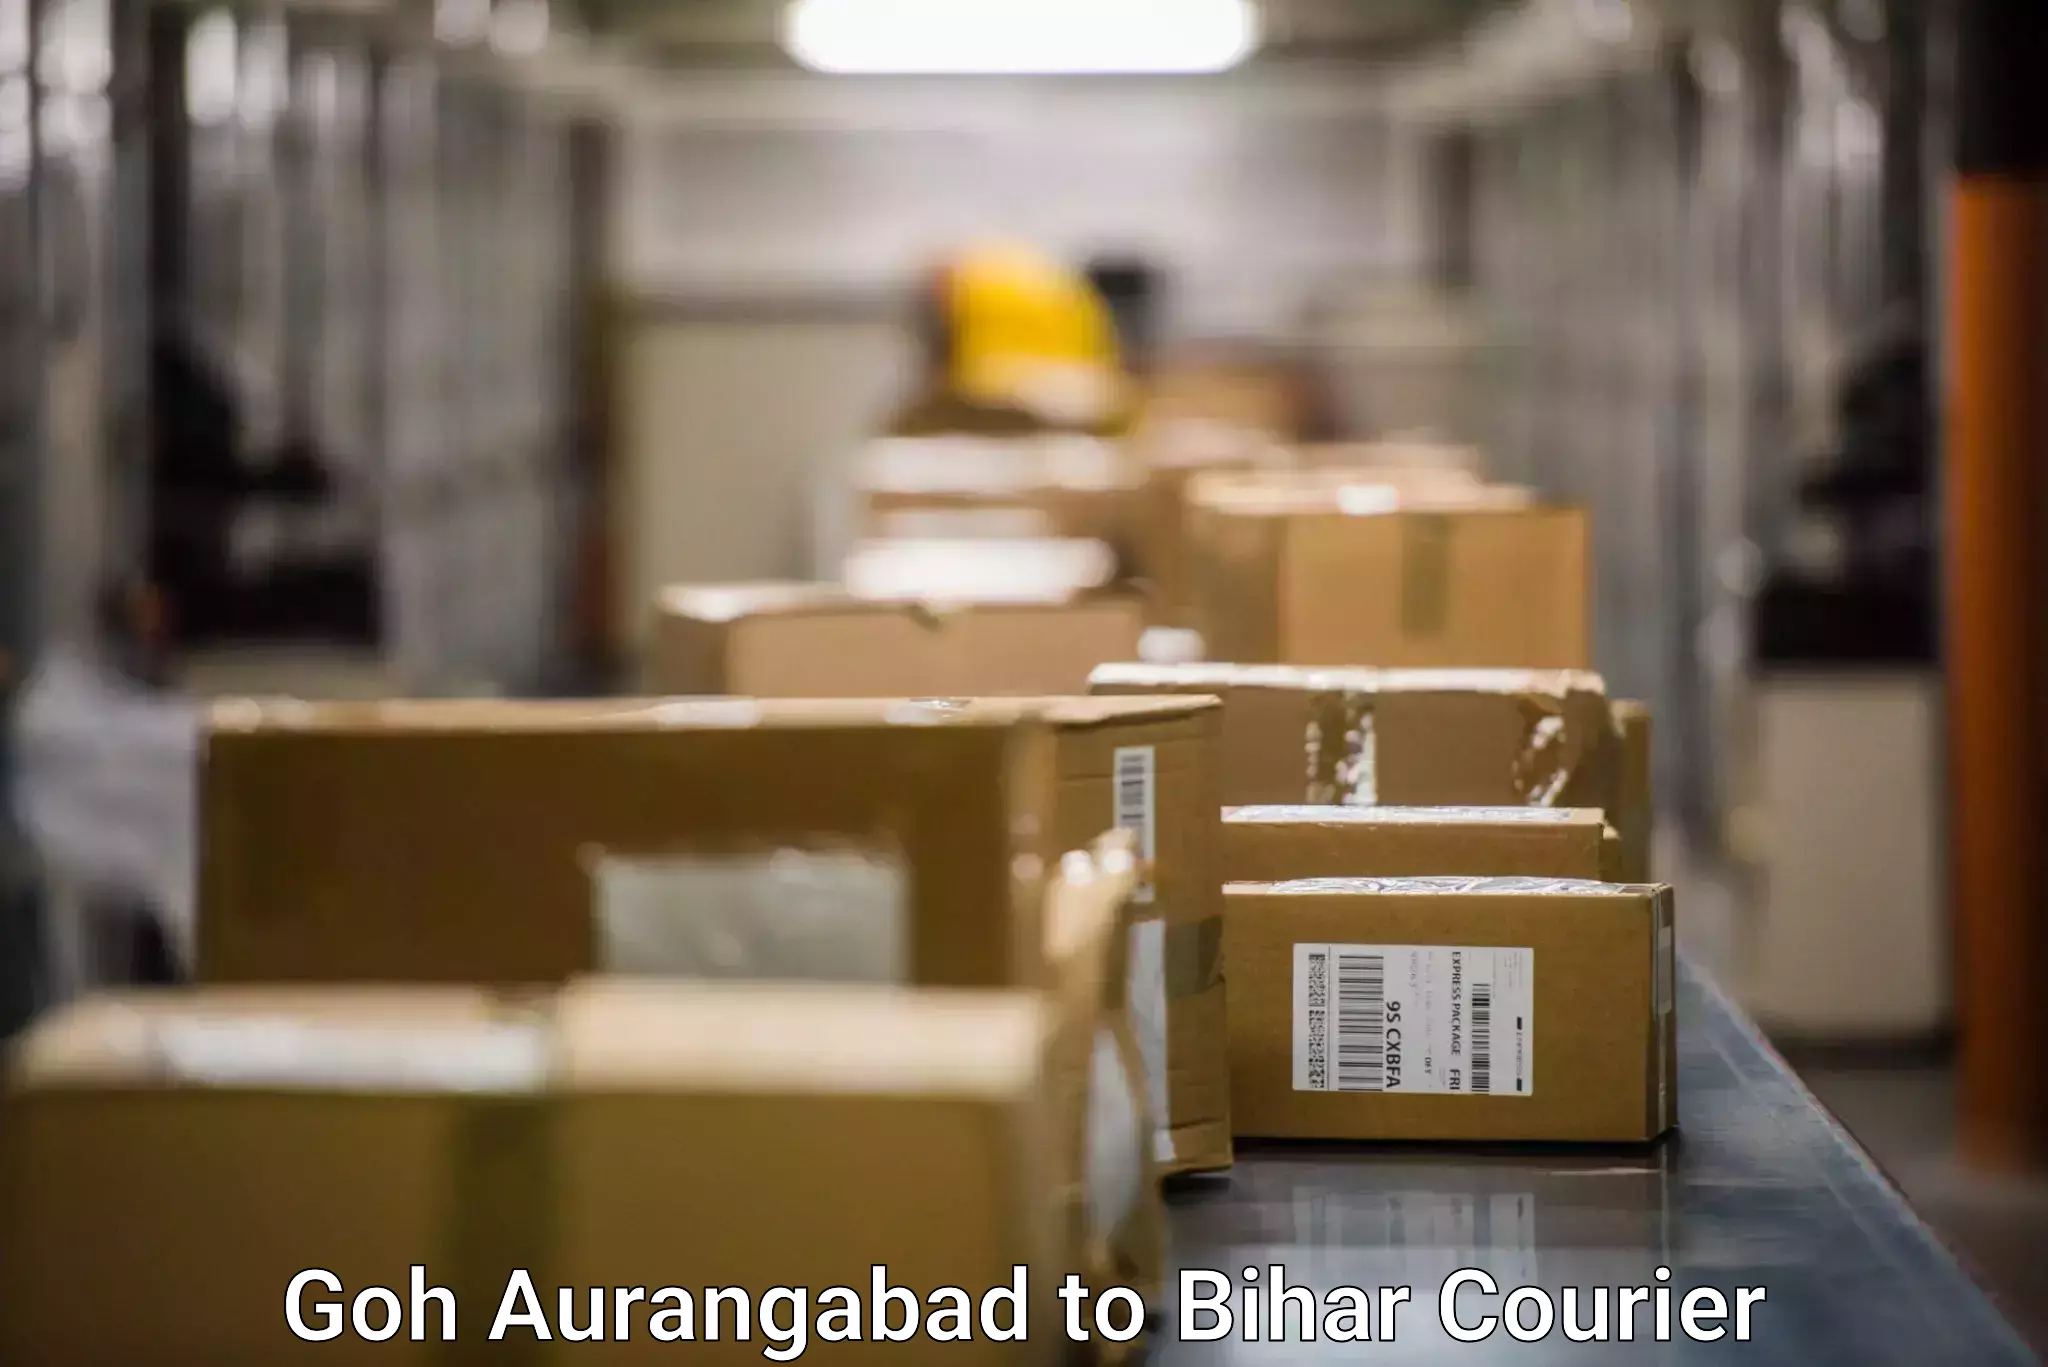 Next-day delivery options Goh Aurangabad to Manihari